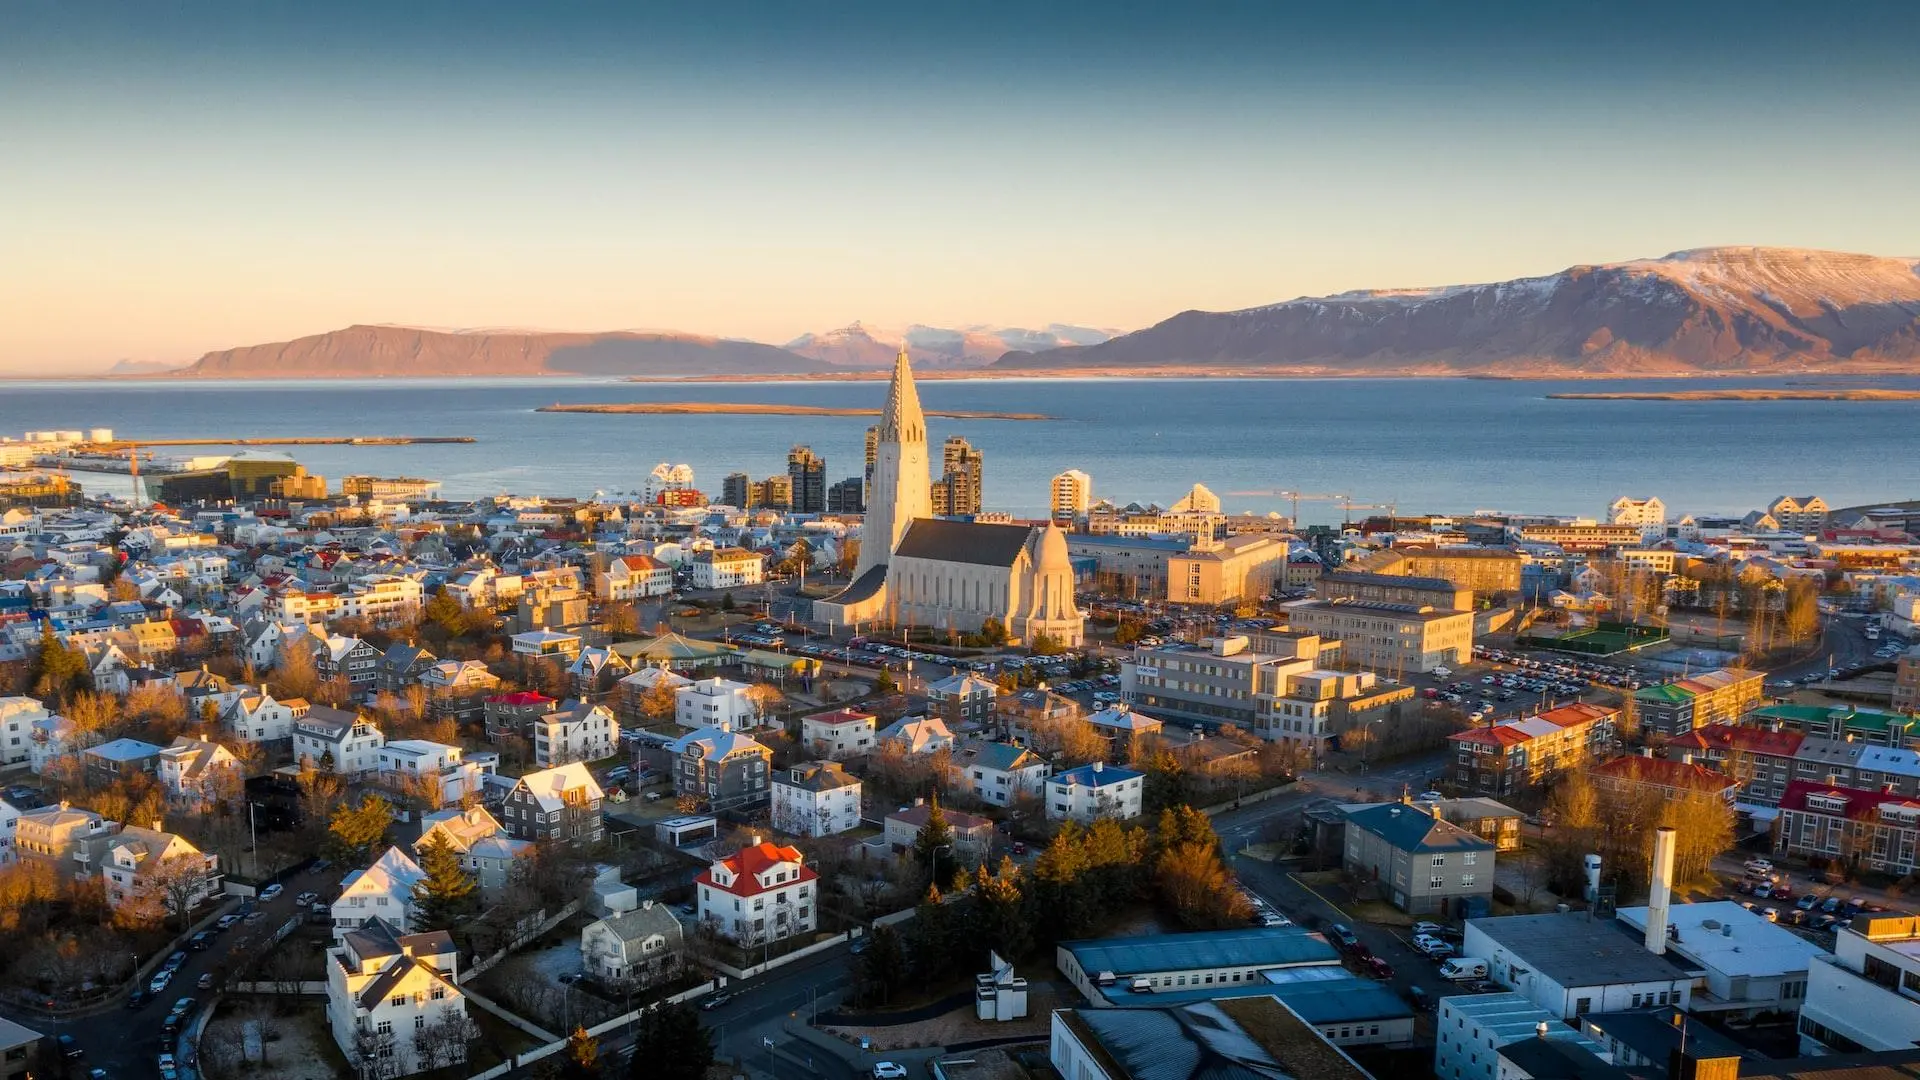 Beste kersttradities in Reykjavik | Luchthaven Taxi